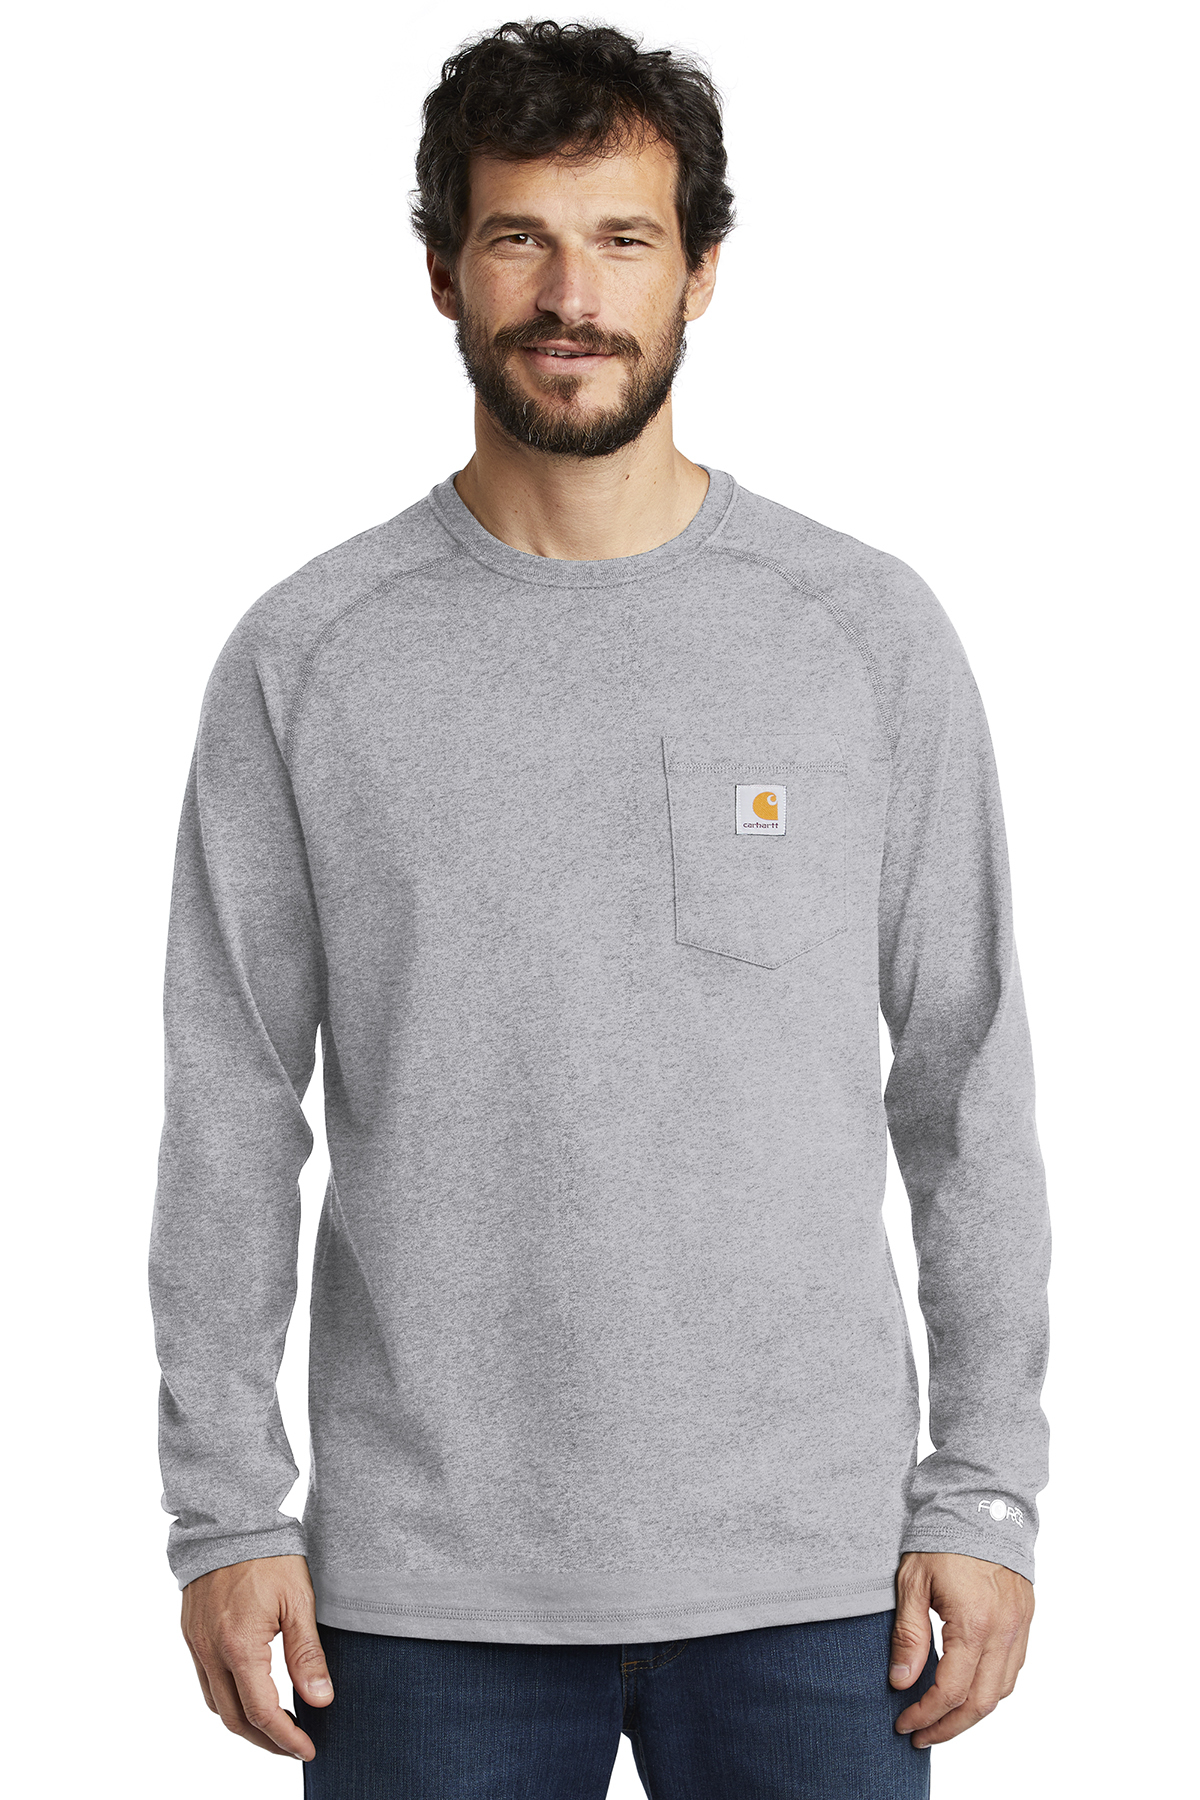 Carhartt Force Cotton Delmont Long Sleeve T-Shirt | Product | SanMar